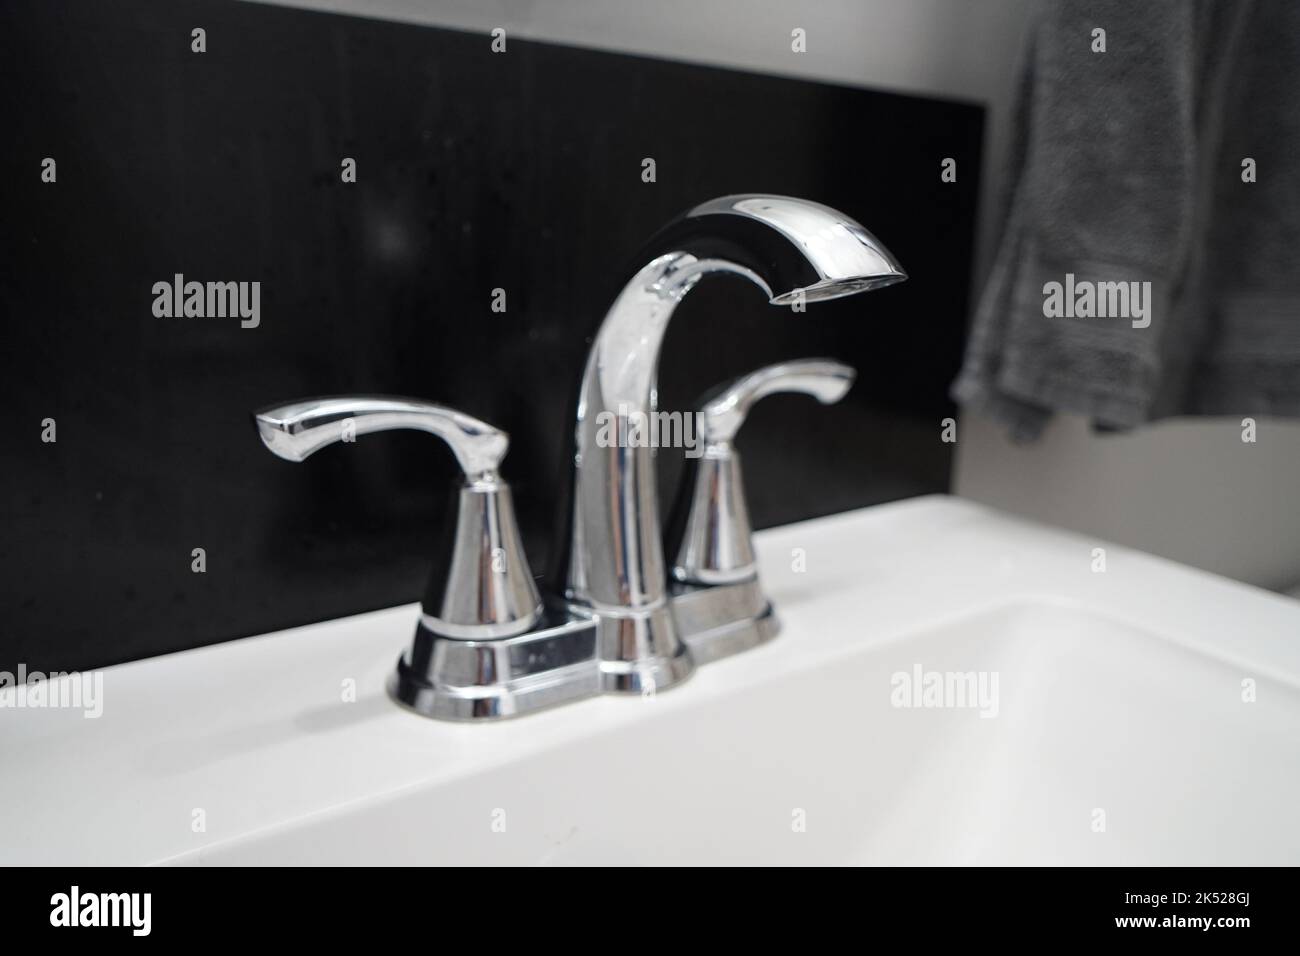 chrome bathroom faucet clean modern nobody Stock Photo